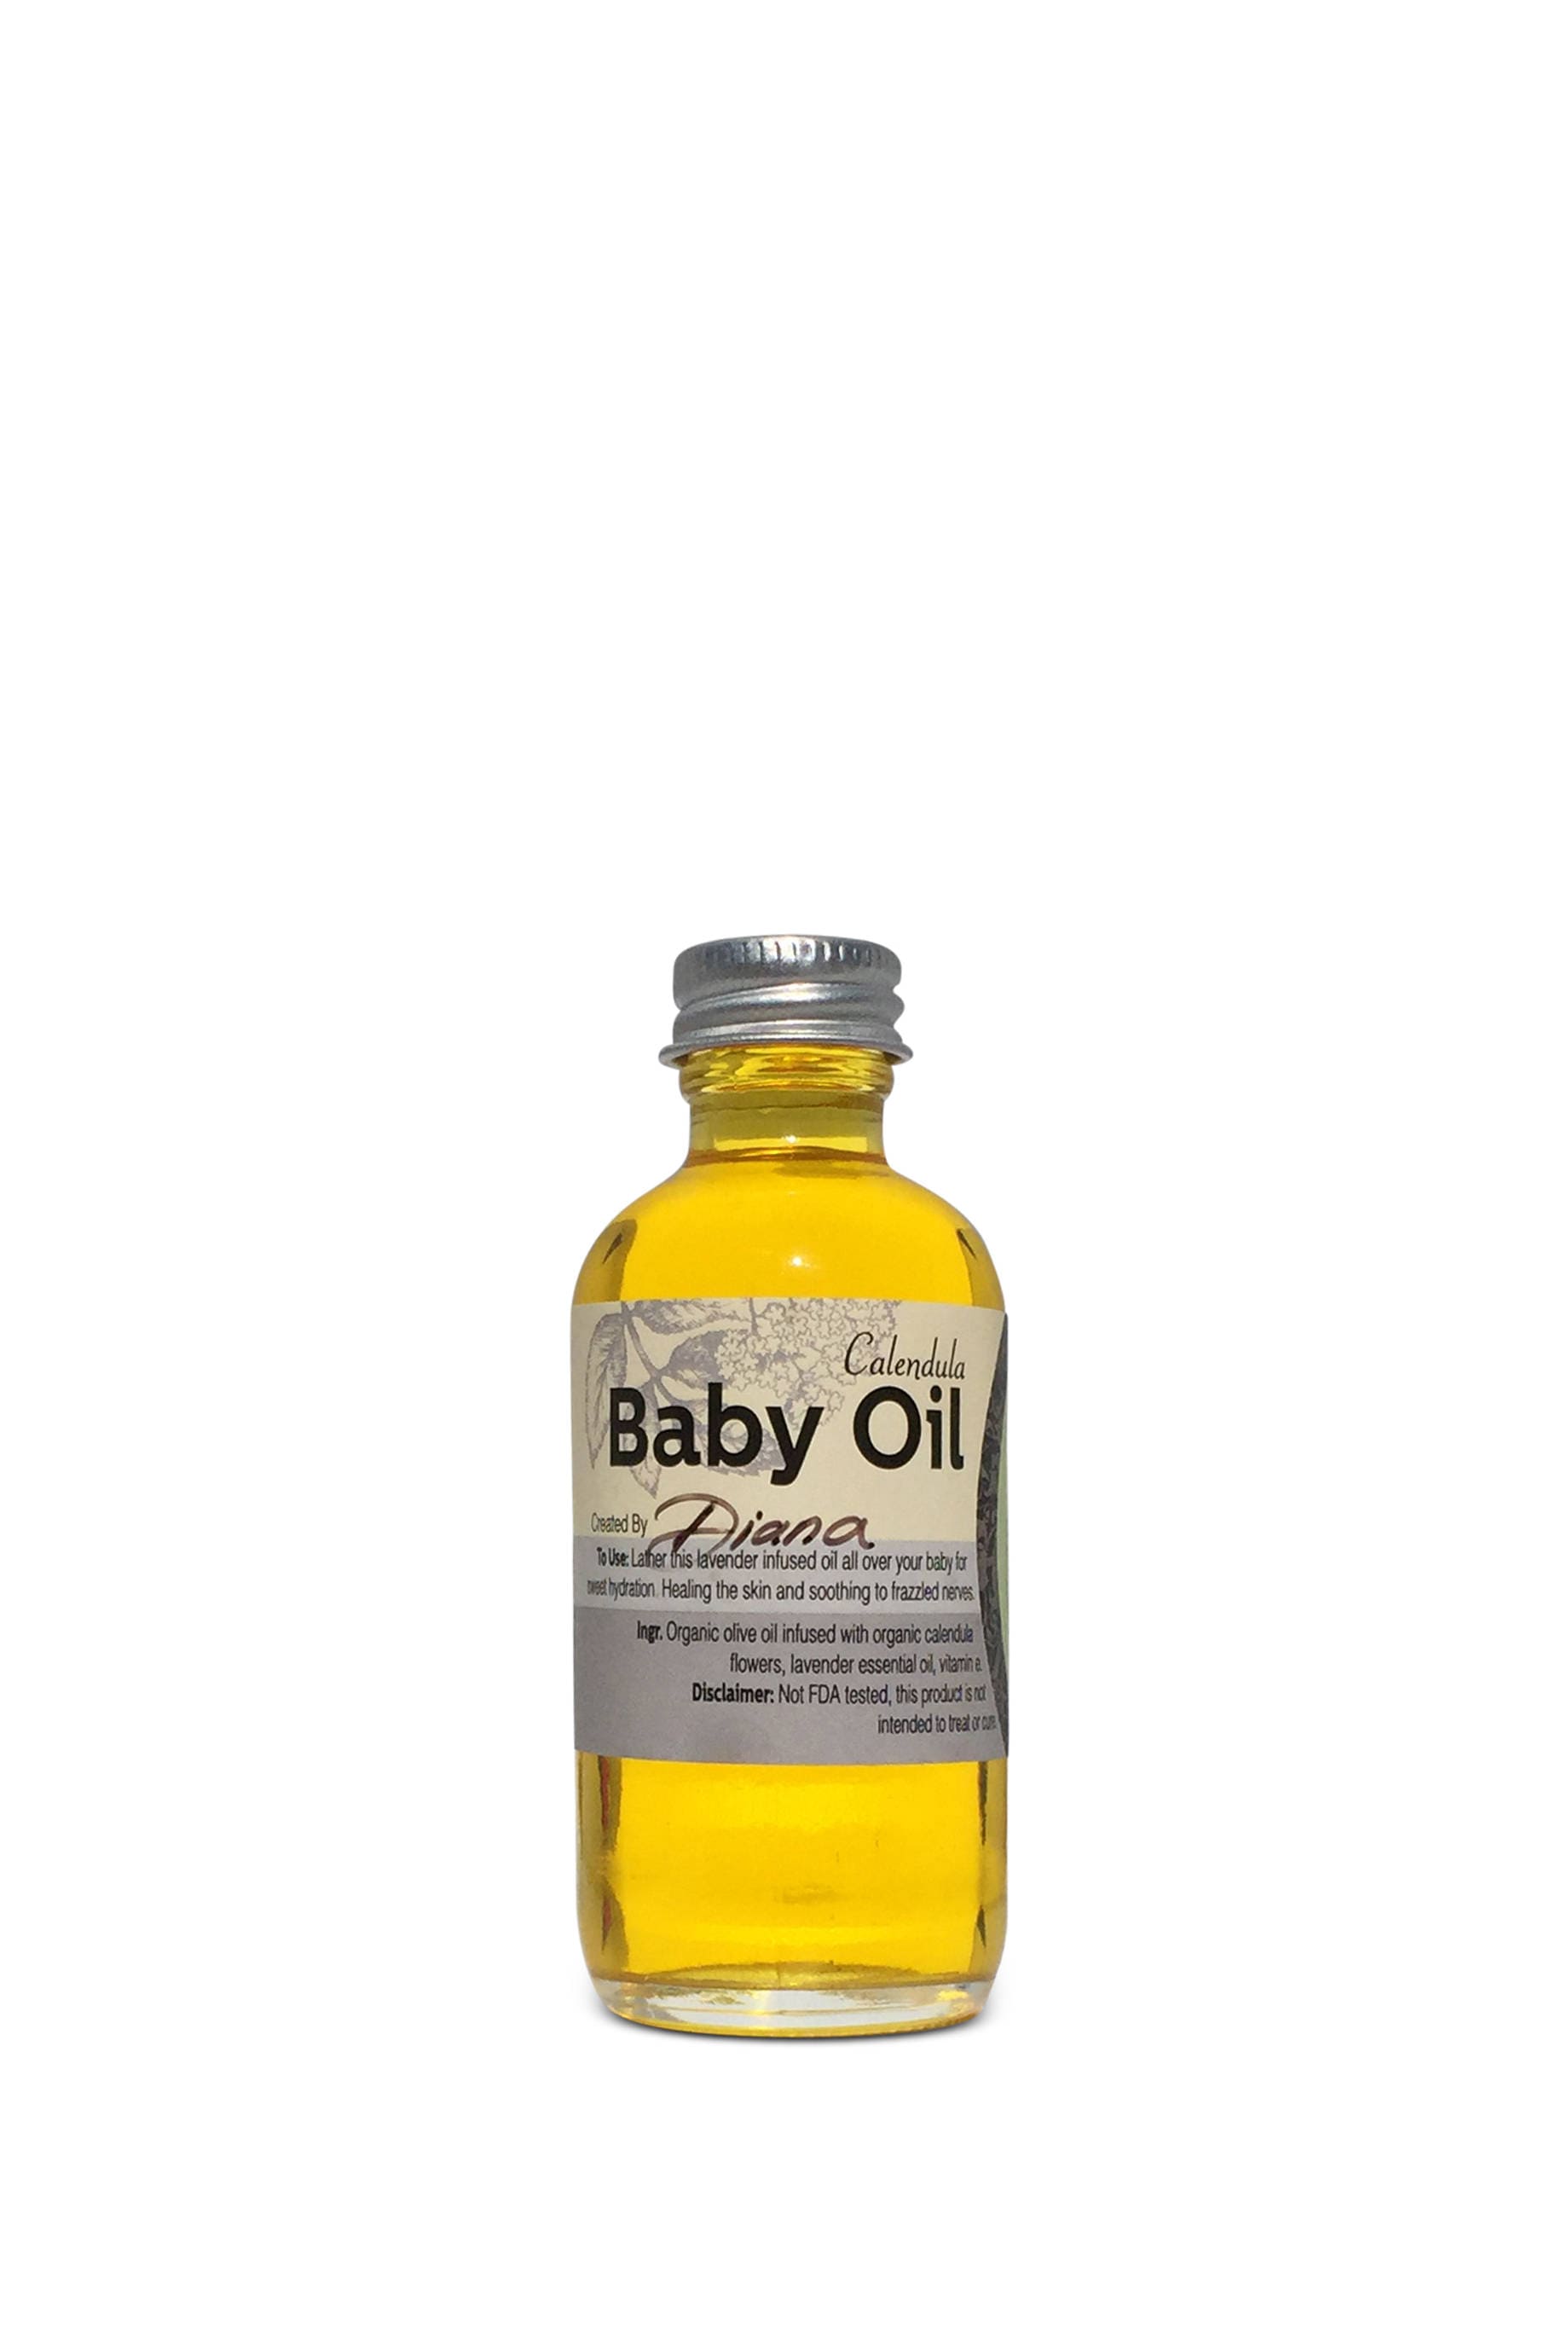 ST.bir GABRU Beard Oil - Patchouli & Cardamom Hair Oil (60 ml) products  price ₹200.00 - Beauty & Wellness at SWASTIK TECHNO SOLUTIONS store in  Feezital.com